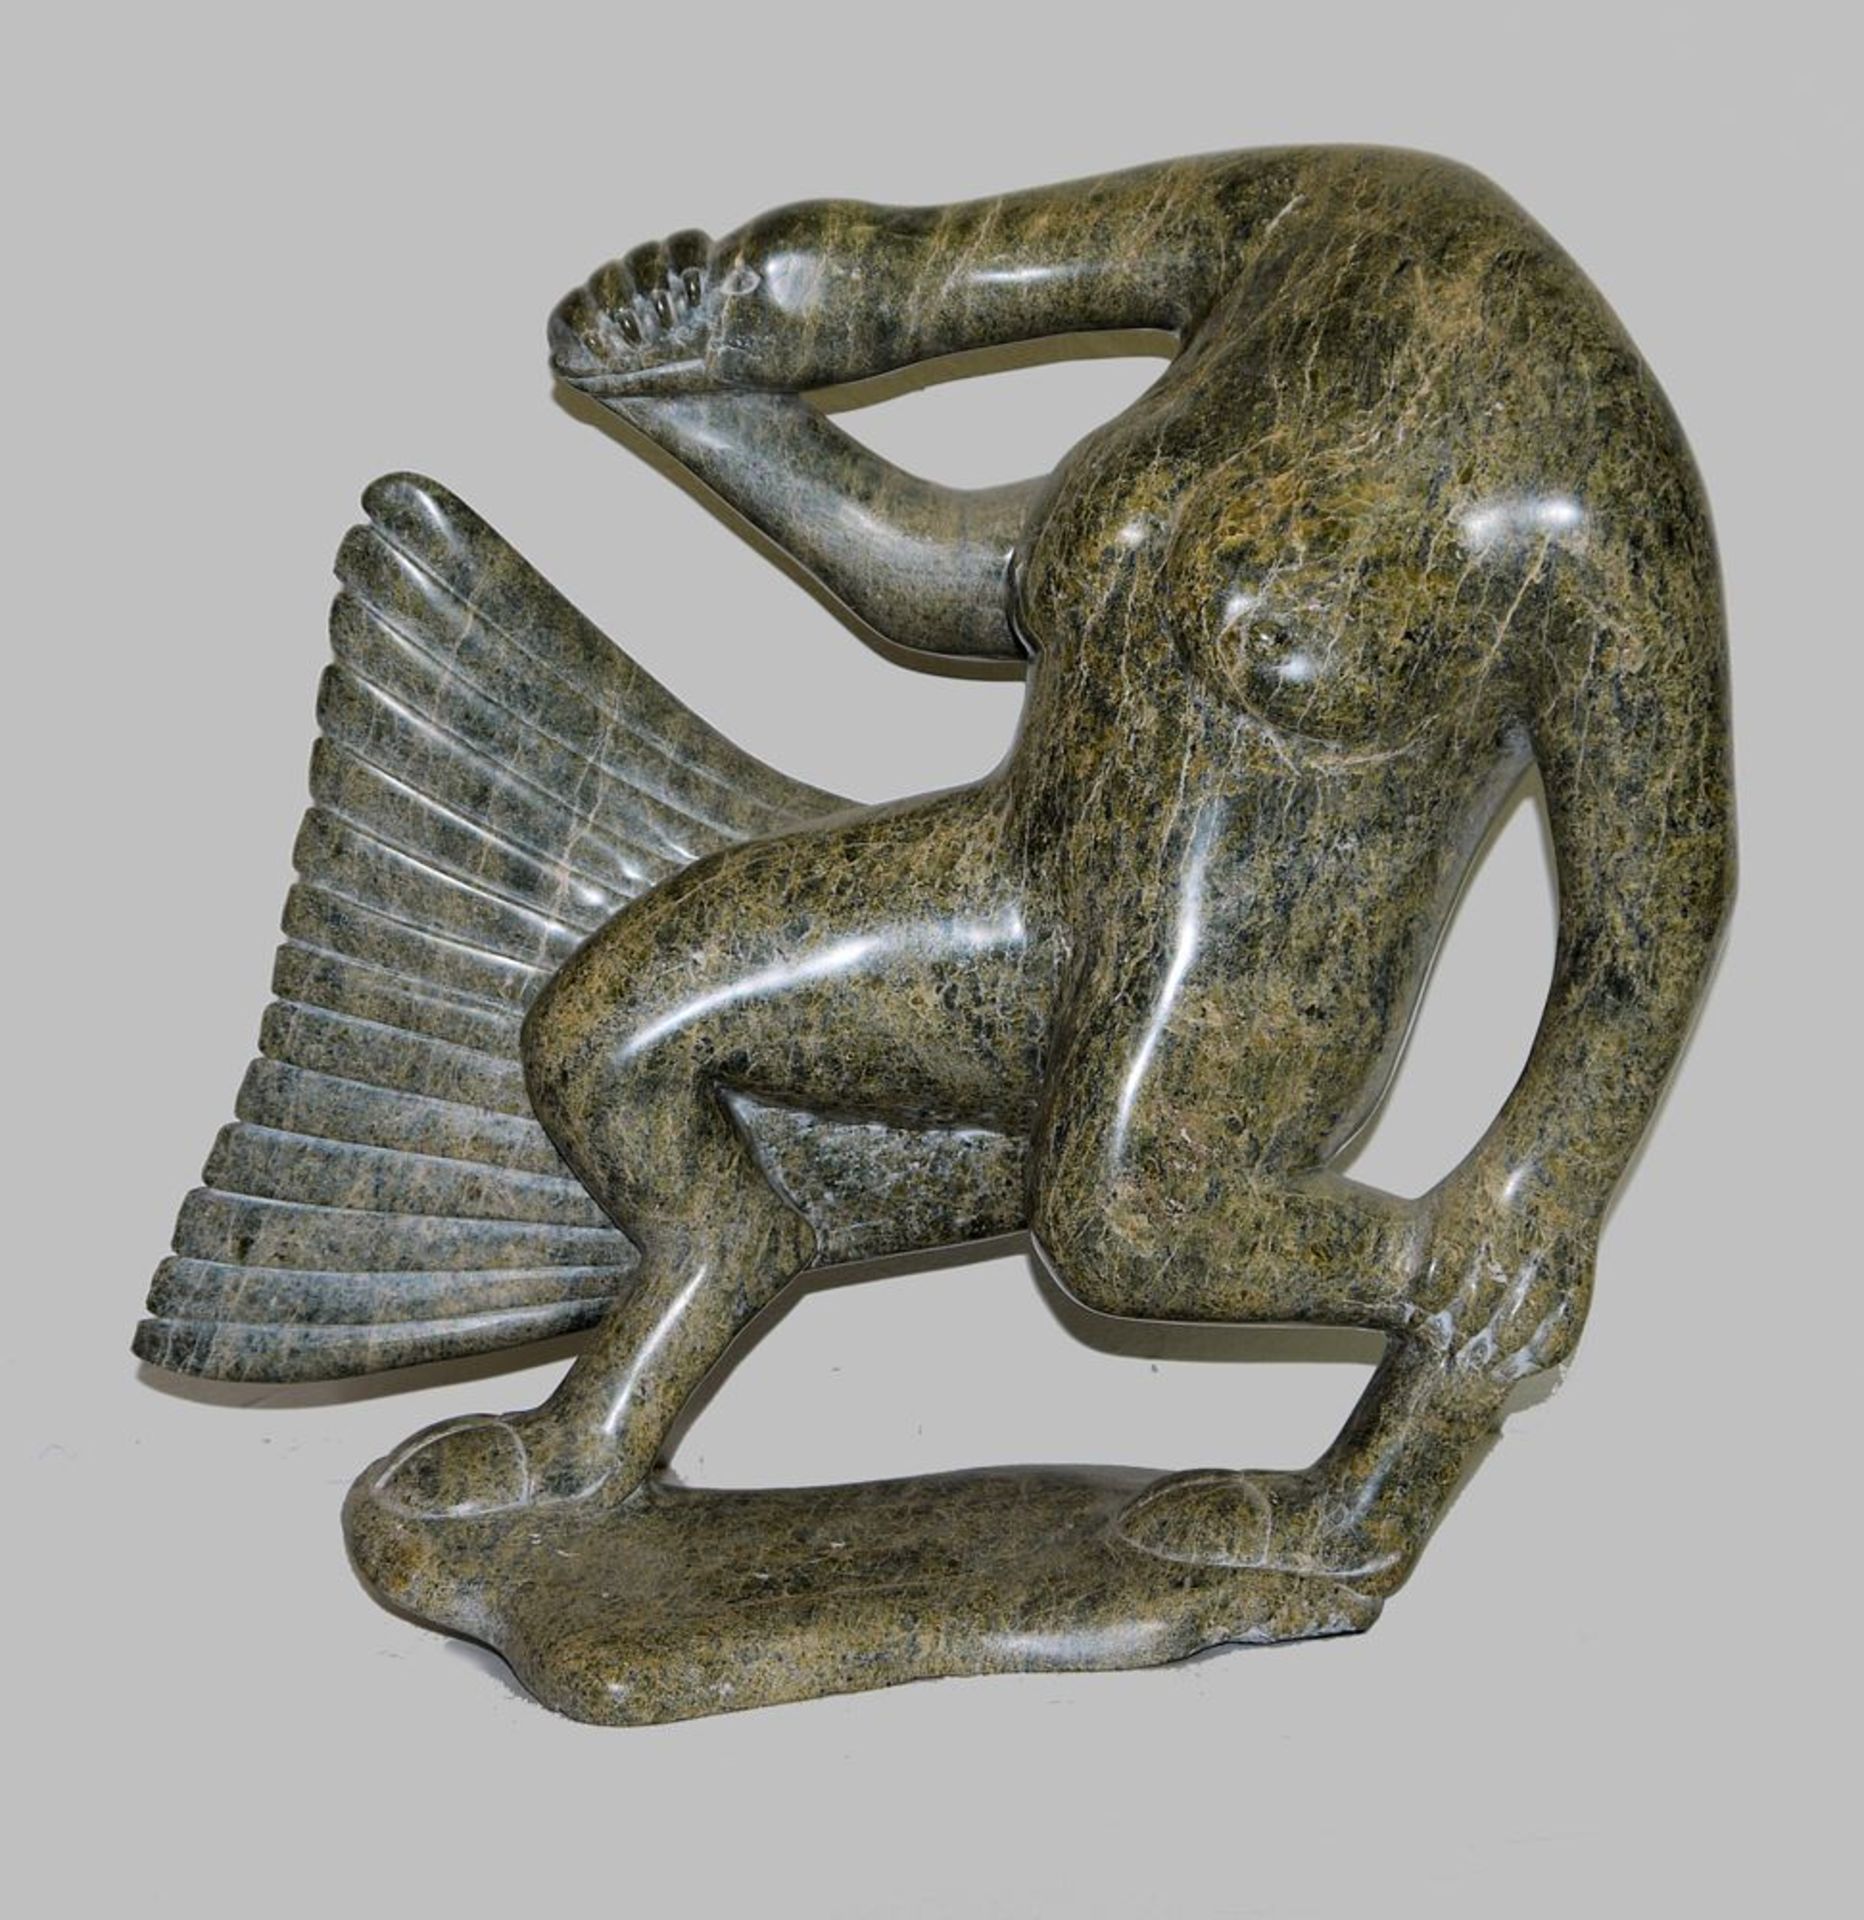 Inuit-Kunst, anonym, Vogelfrau, Serpentin-Skulptur